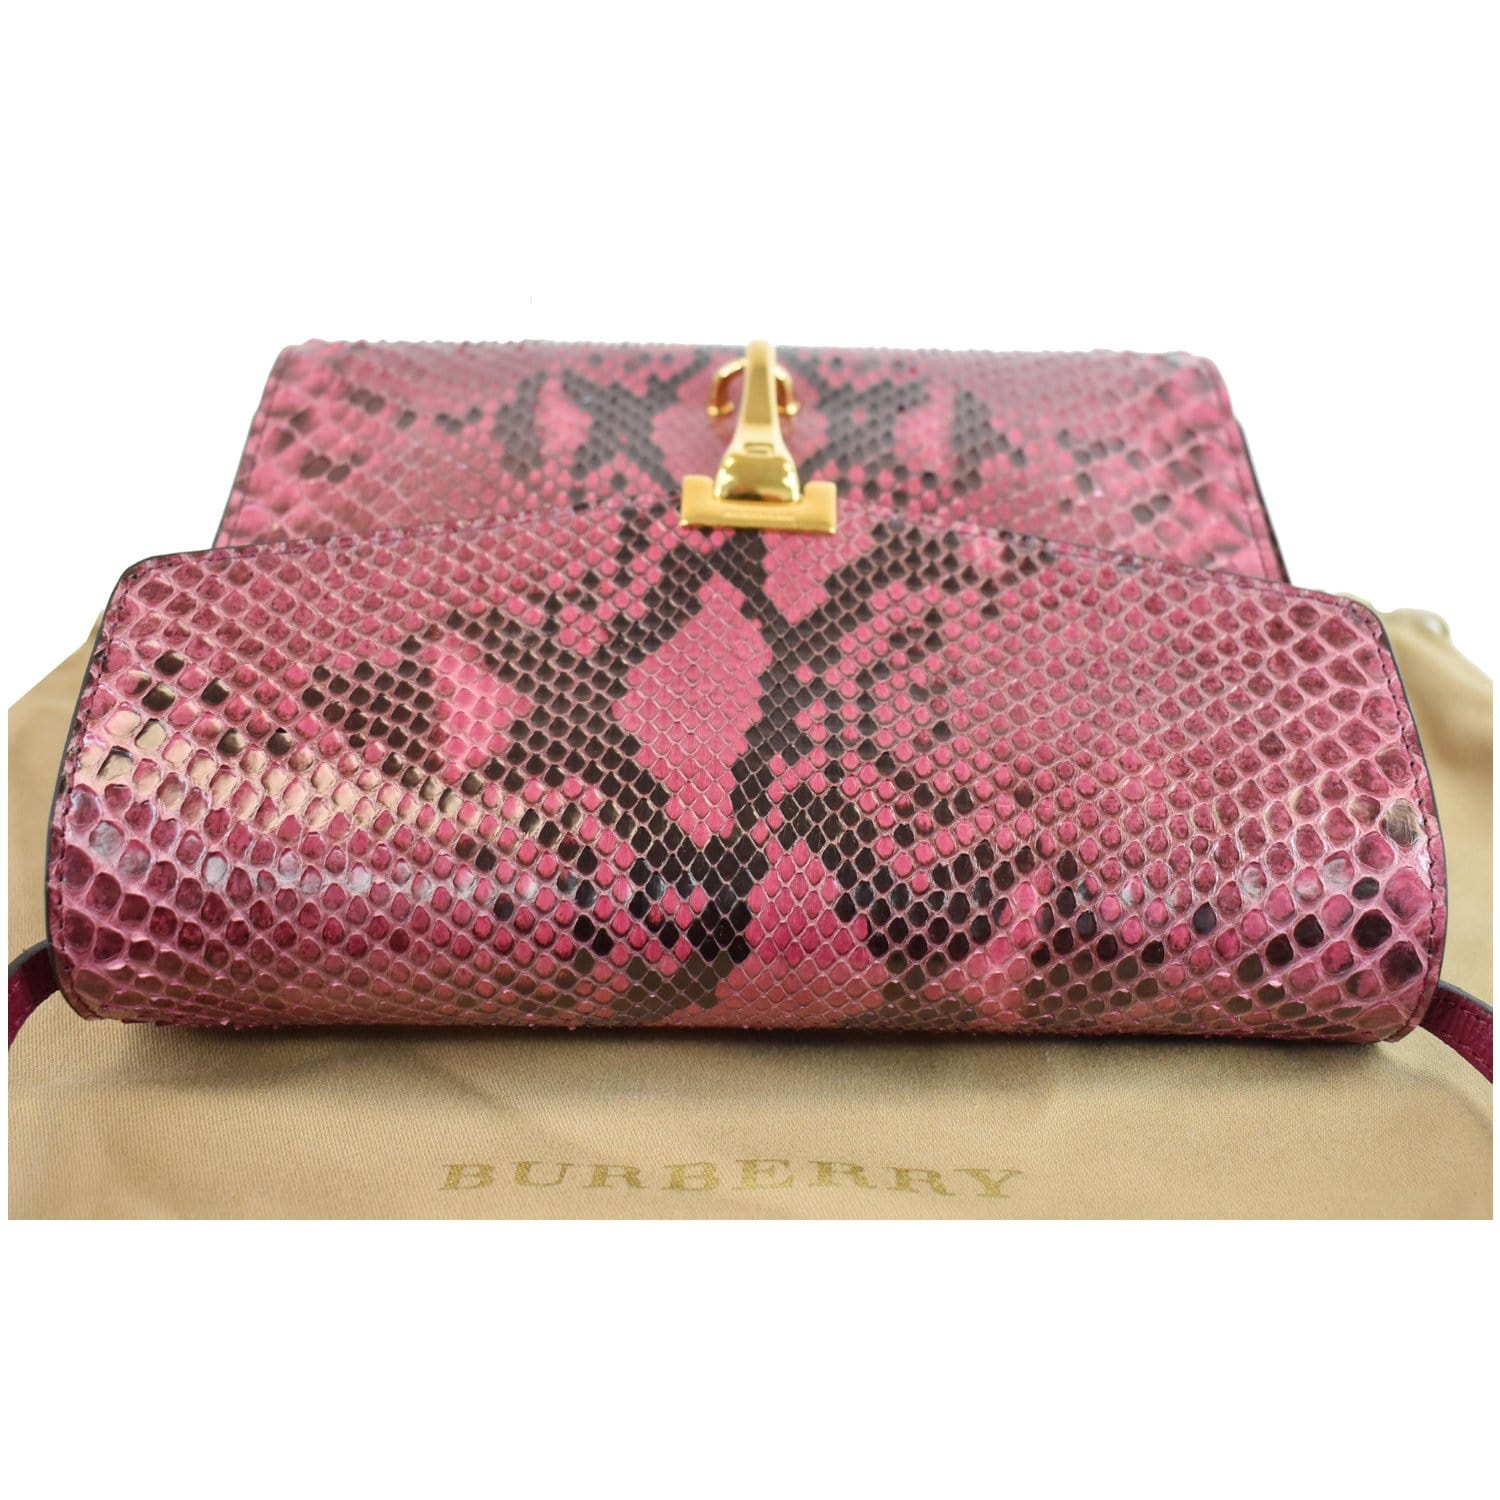 Madalena bag in python print leather - Brick - Brontibay